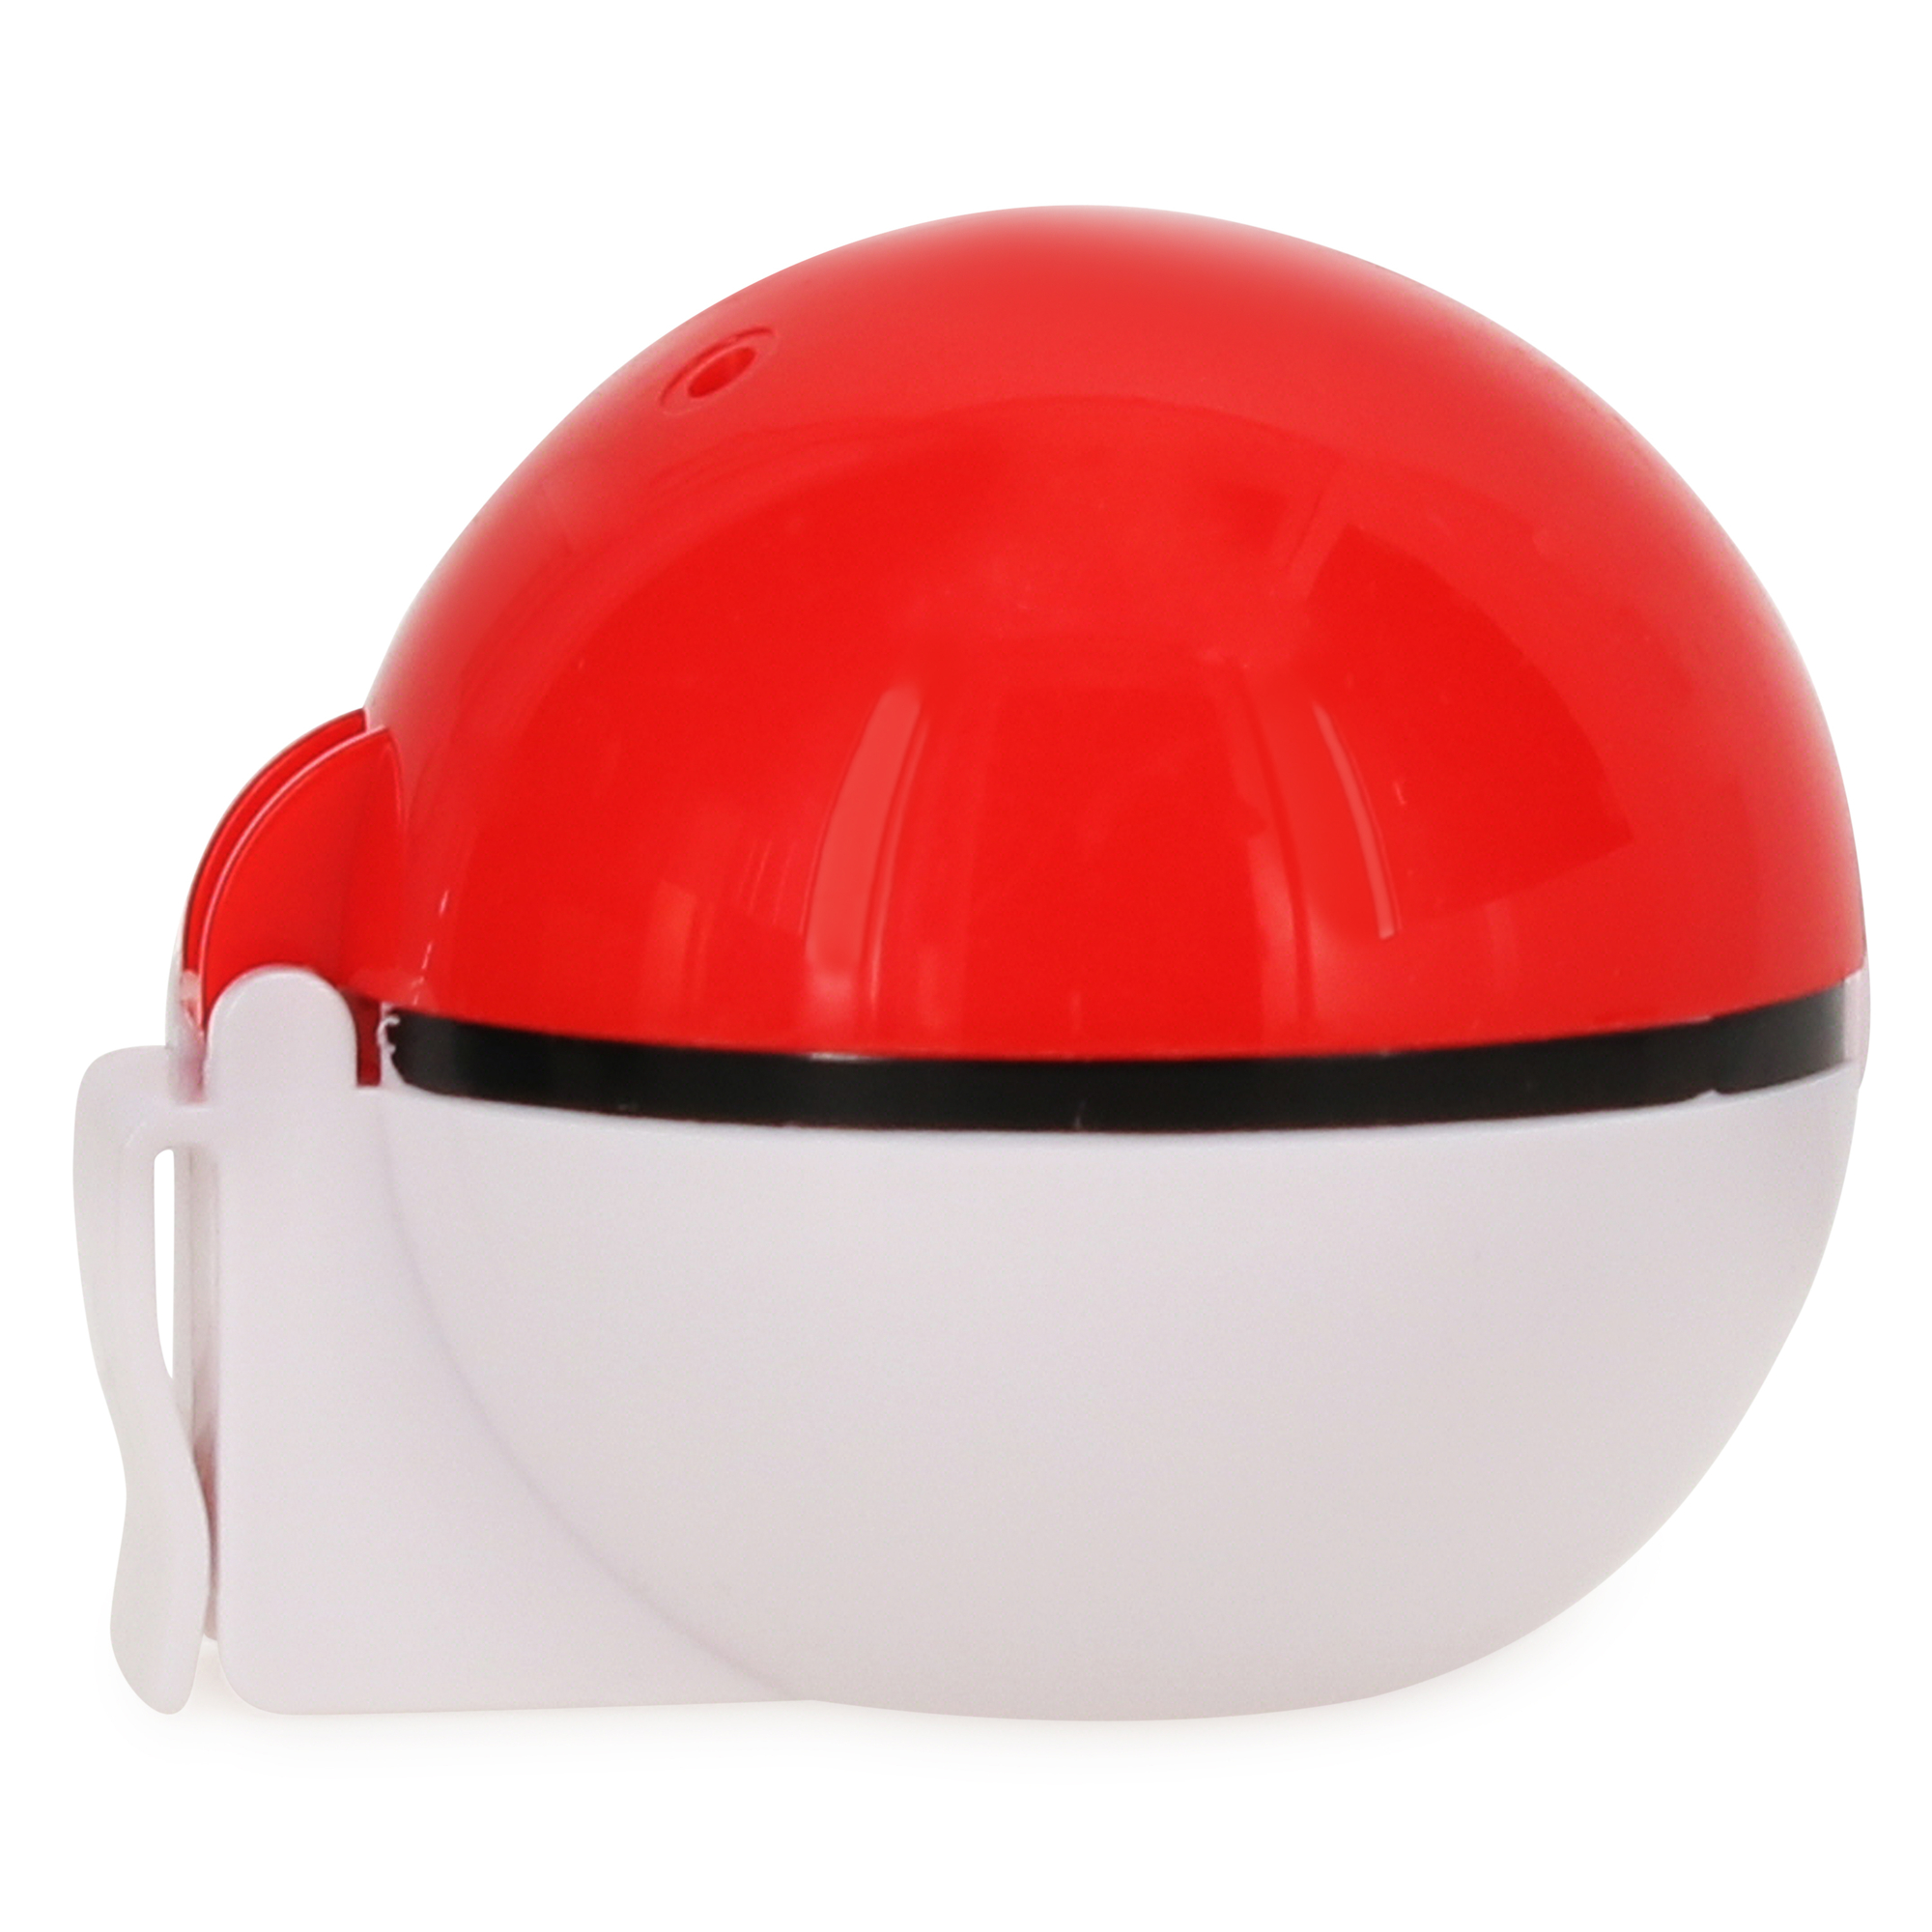 Pokemon™ Trainer Pokeball & Figure Set